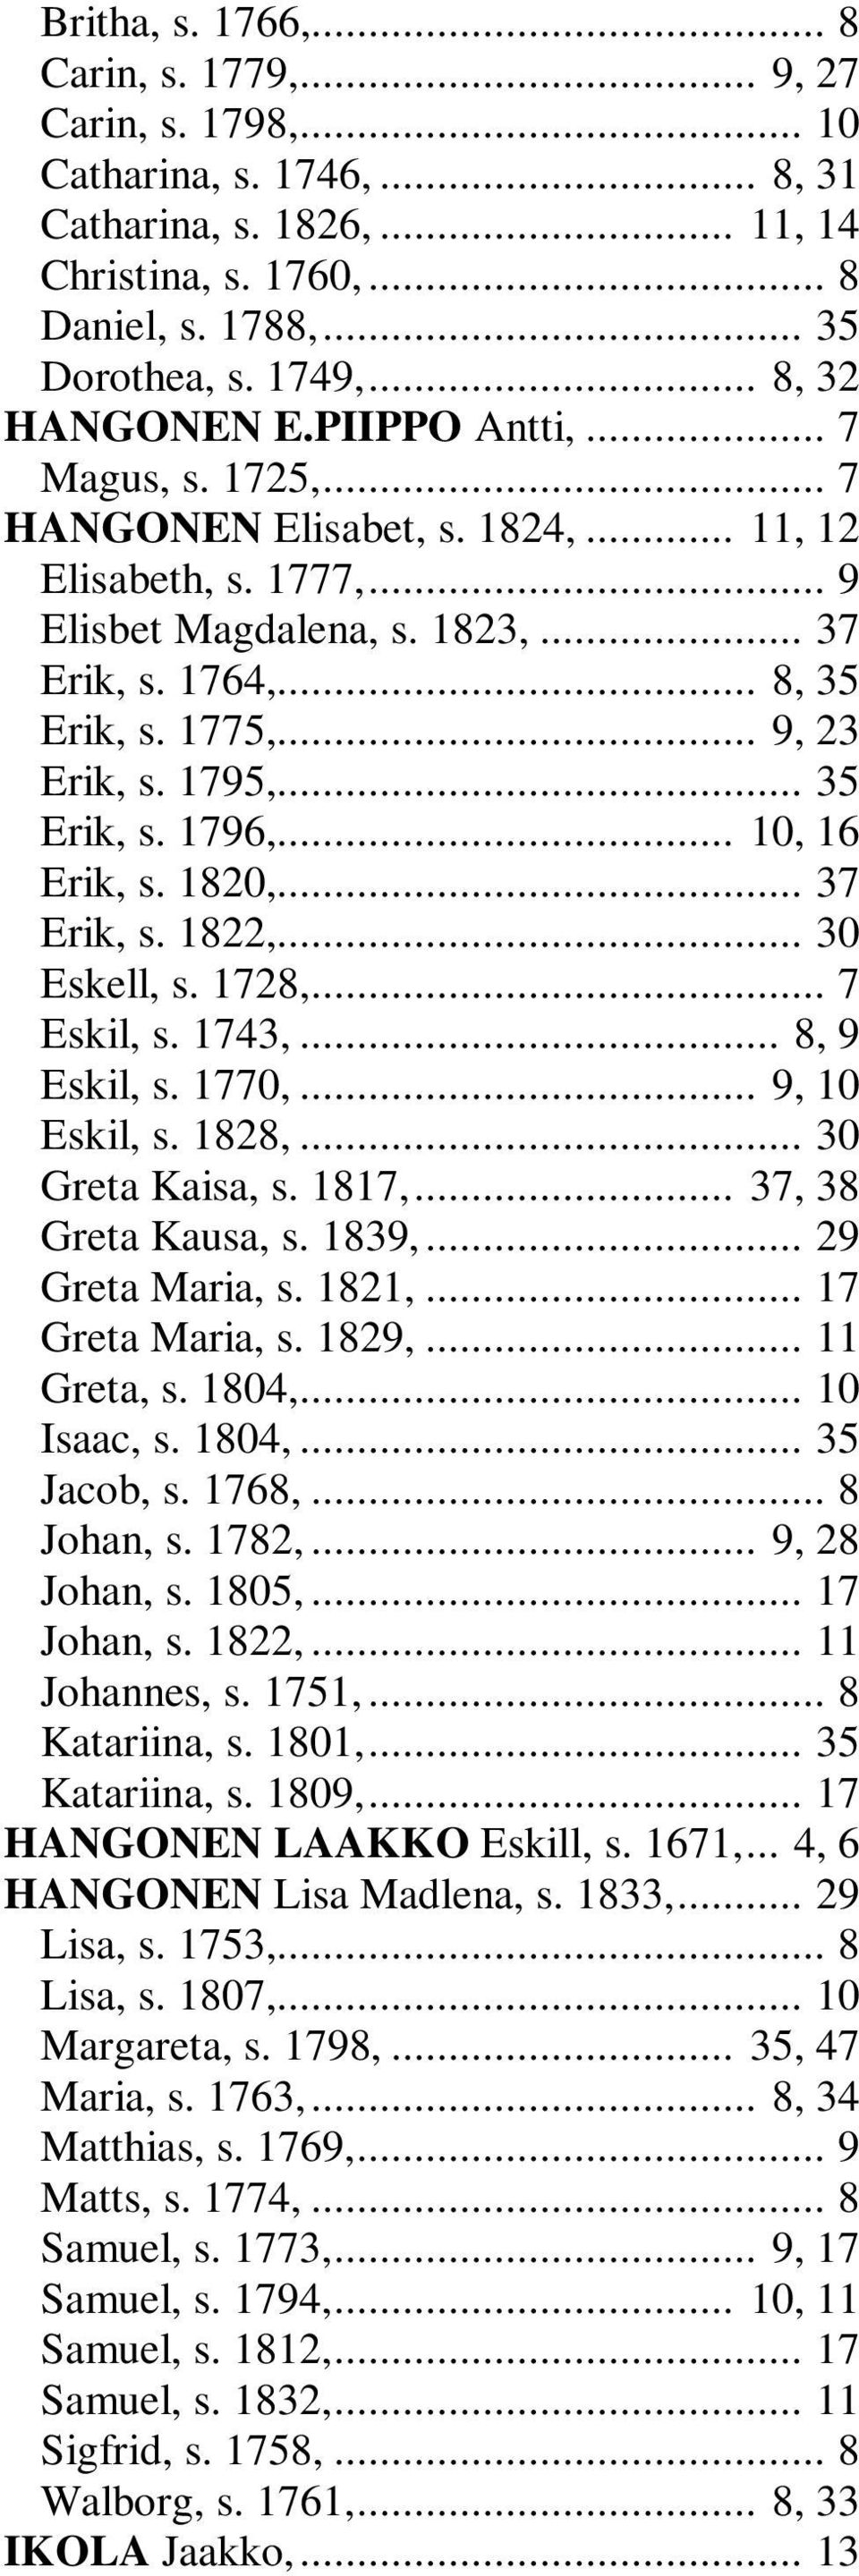 .. 9, 23 Erik, s. 1795,... 35 Erik, s. 1796,... 10, 16 Erik, s. 1820,... 37 Erik, s. 1822,... 30 Eskell, s. 1728,... 7 Eskil, s. 1743,... 8, 9 Eskil, s. 1770,... 9, 10 Eskil, s. 1828,.